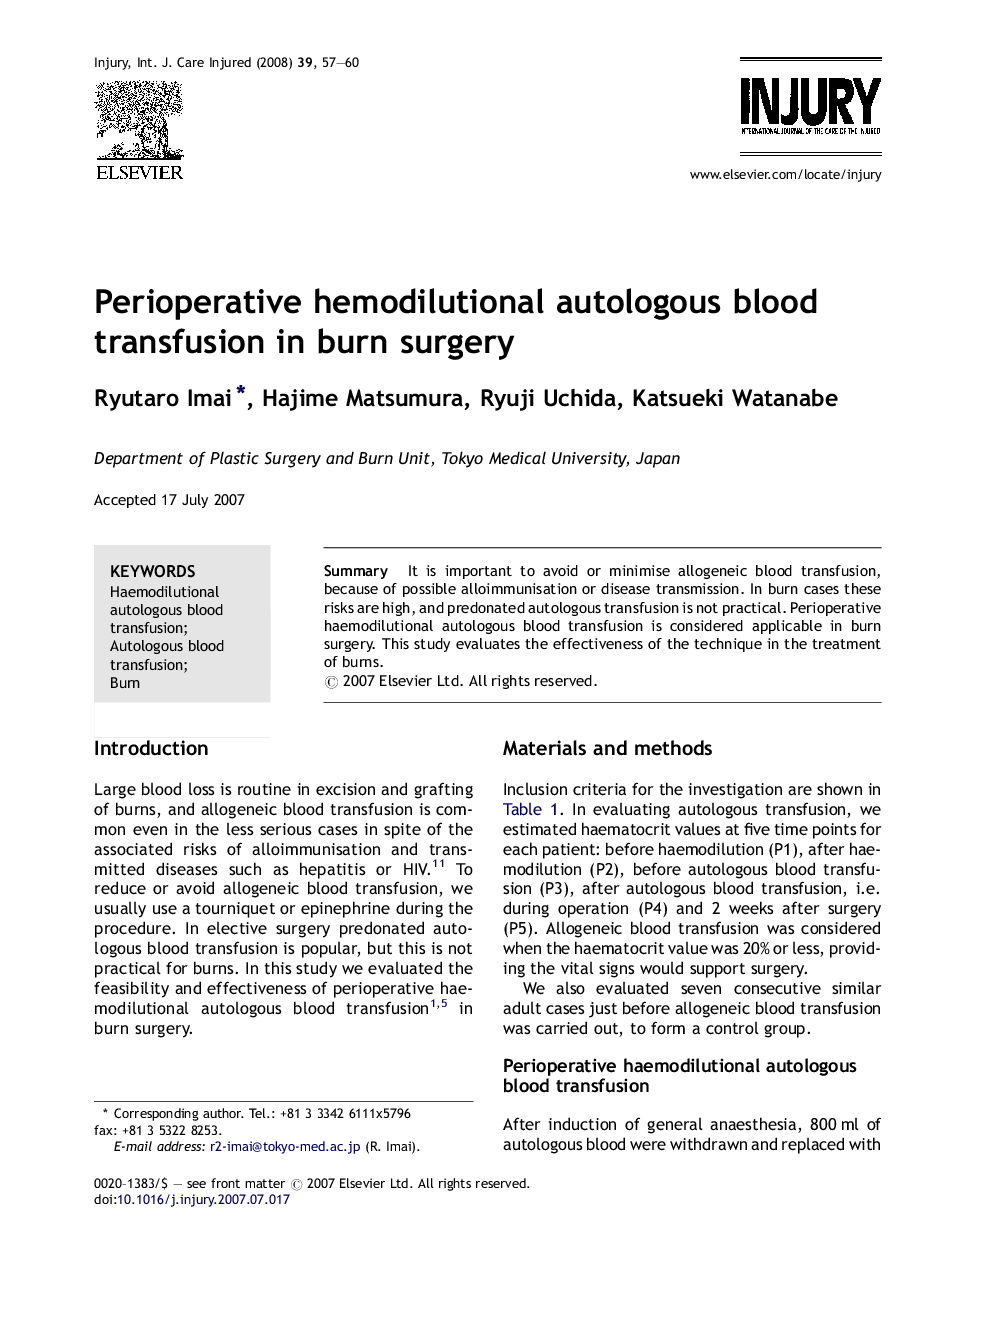 Perioperative hemodilutional autologous blood transfusion in burn surgery